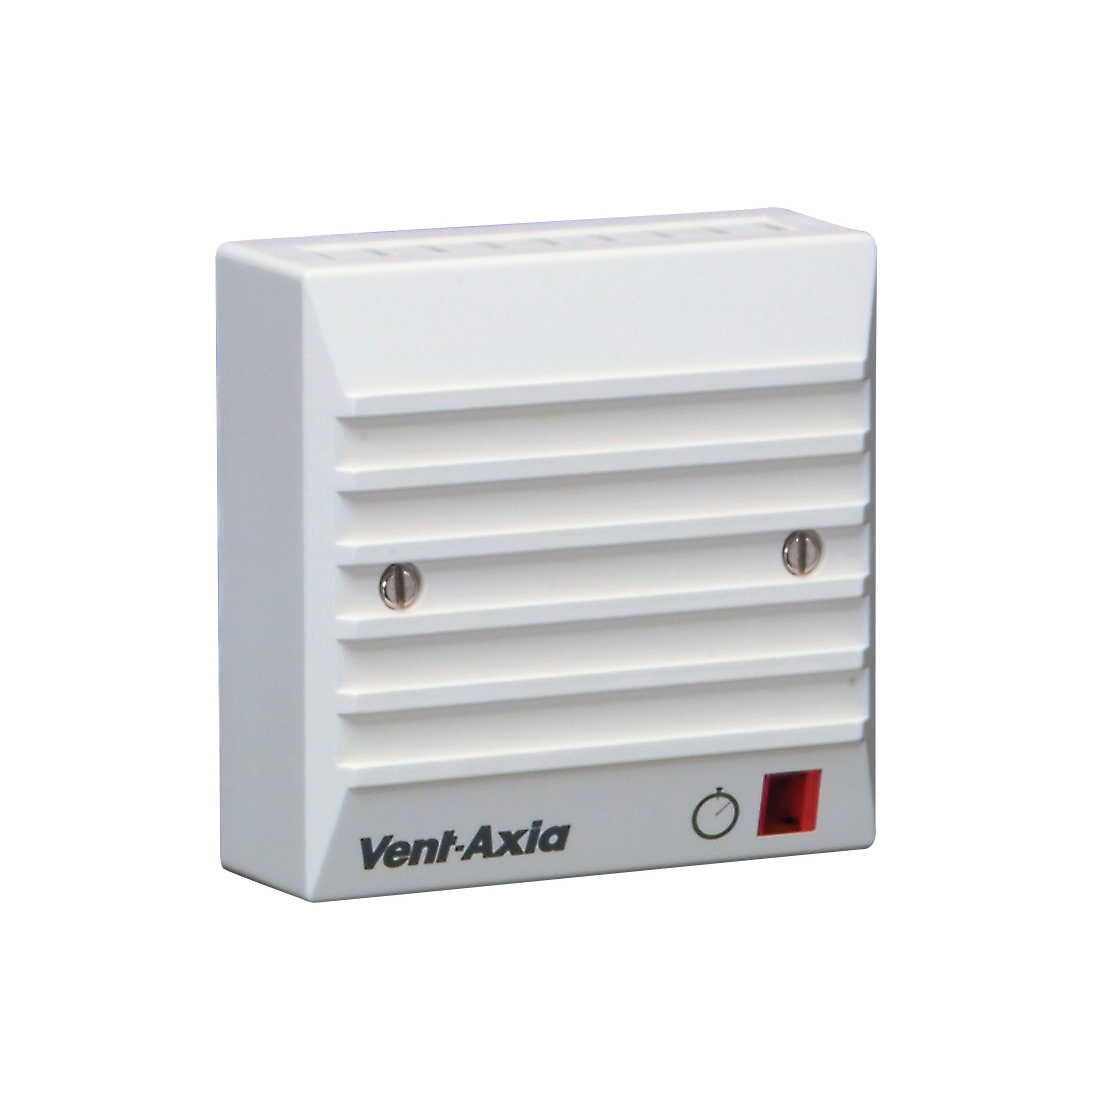 vent-axia-isolator-replay-controller-bpc-ventilation